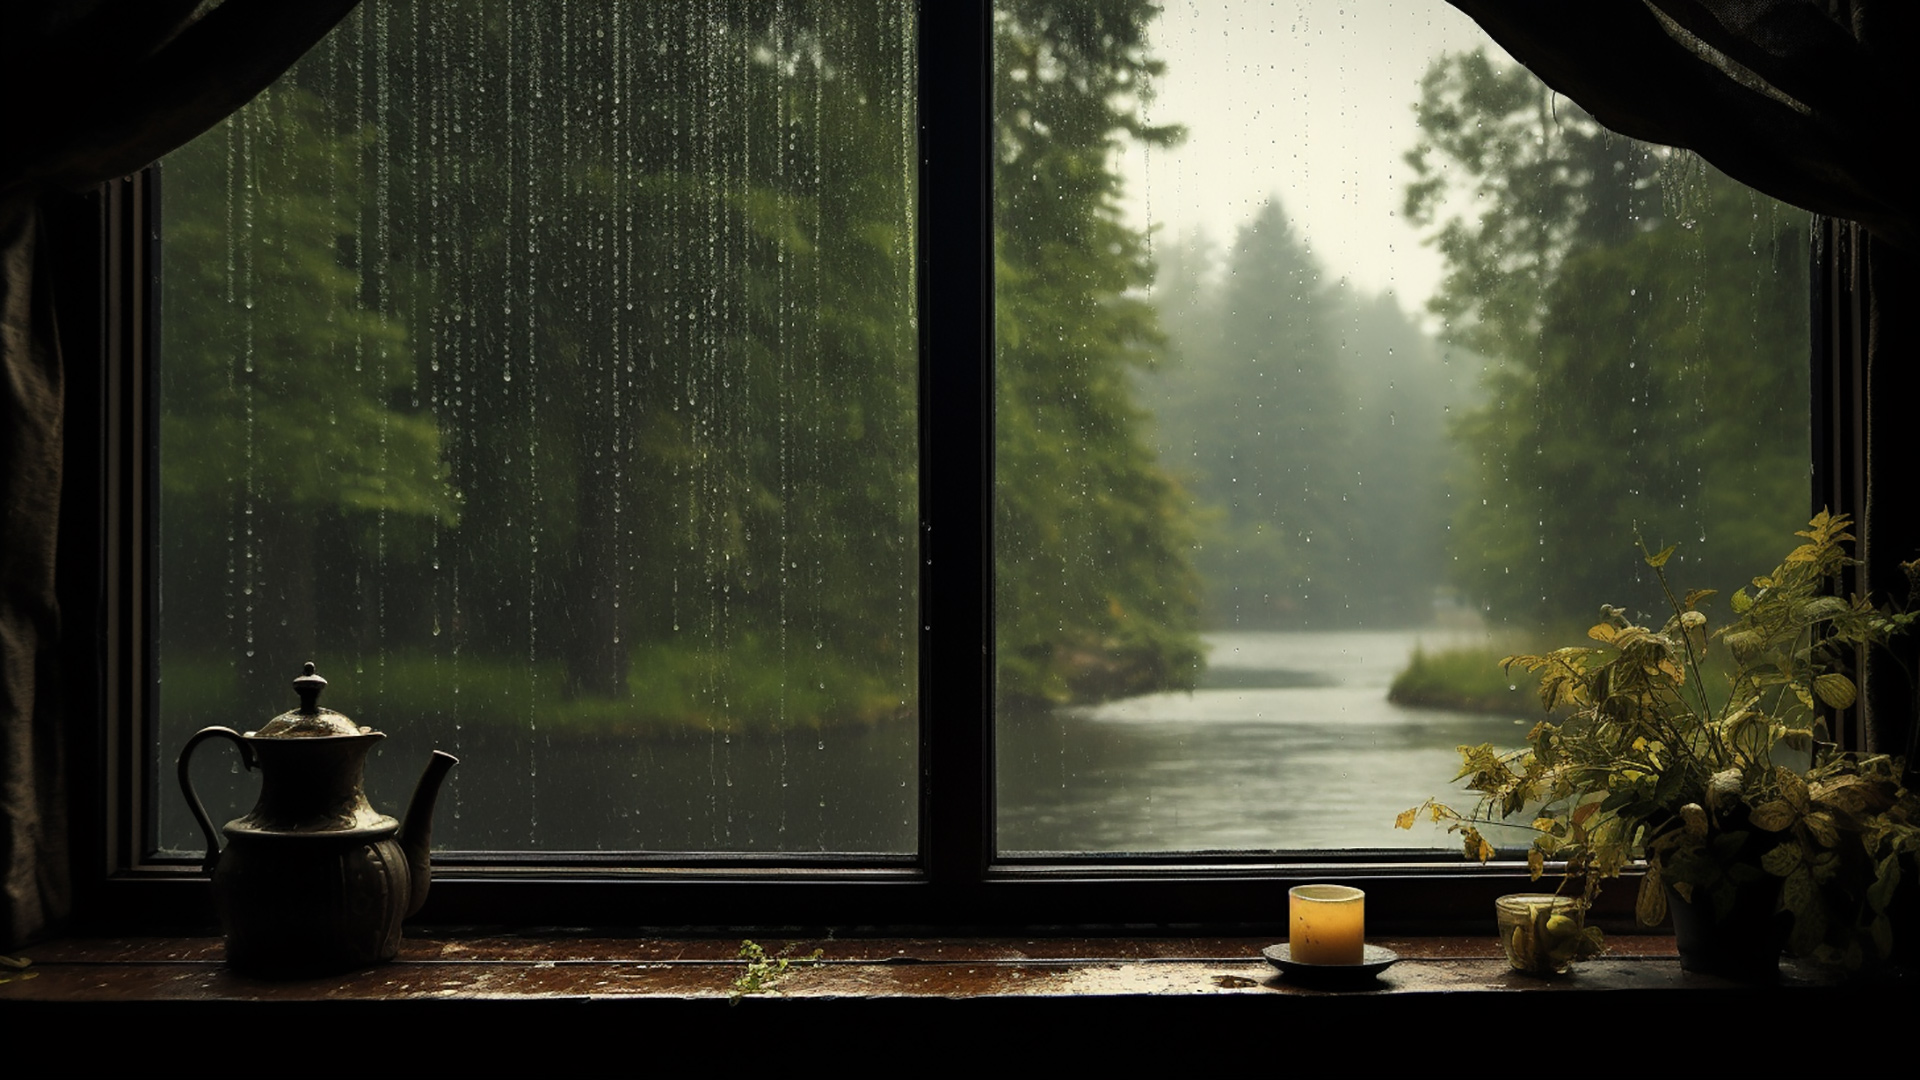 Aesthetic rainy window views to enhance your desktop experience- wallpaper